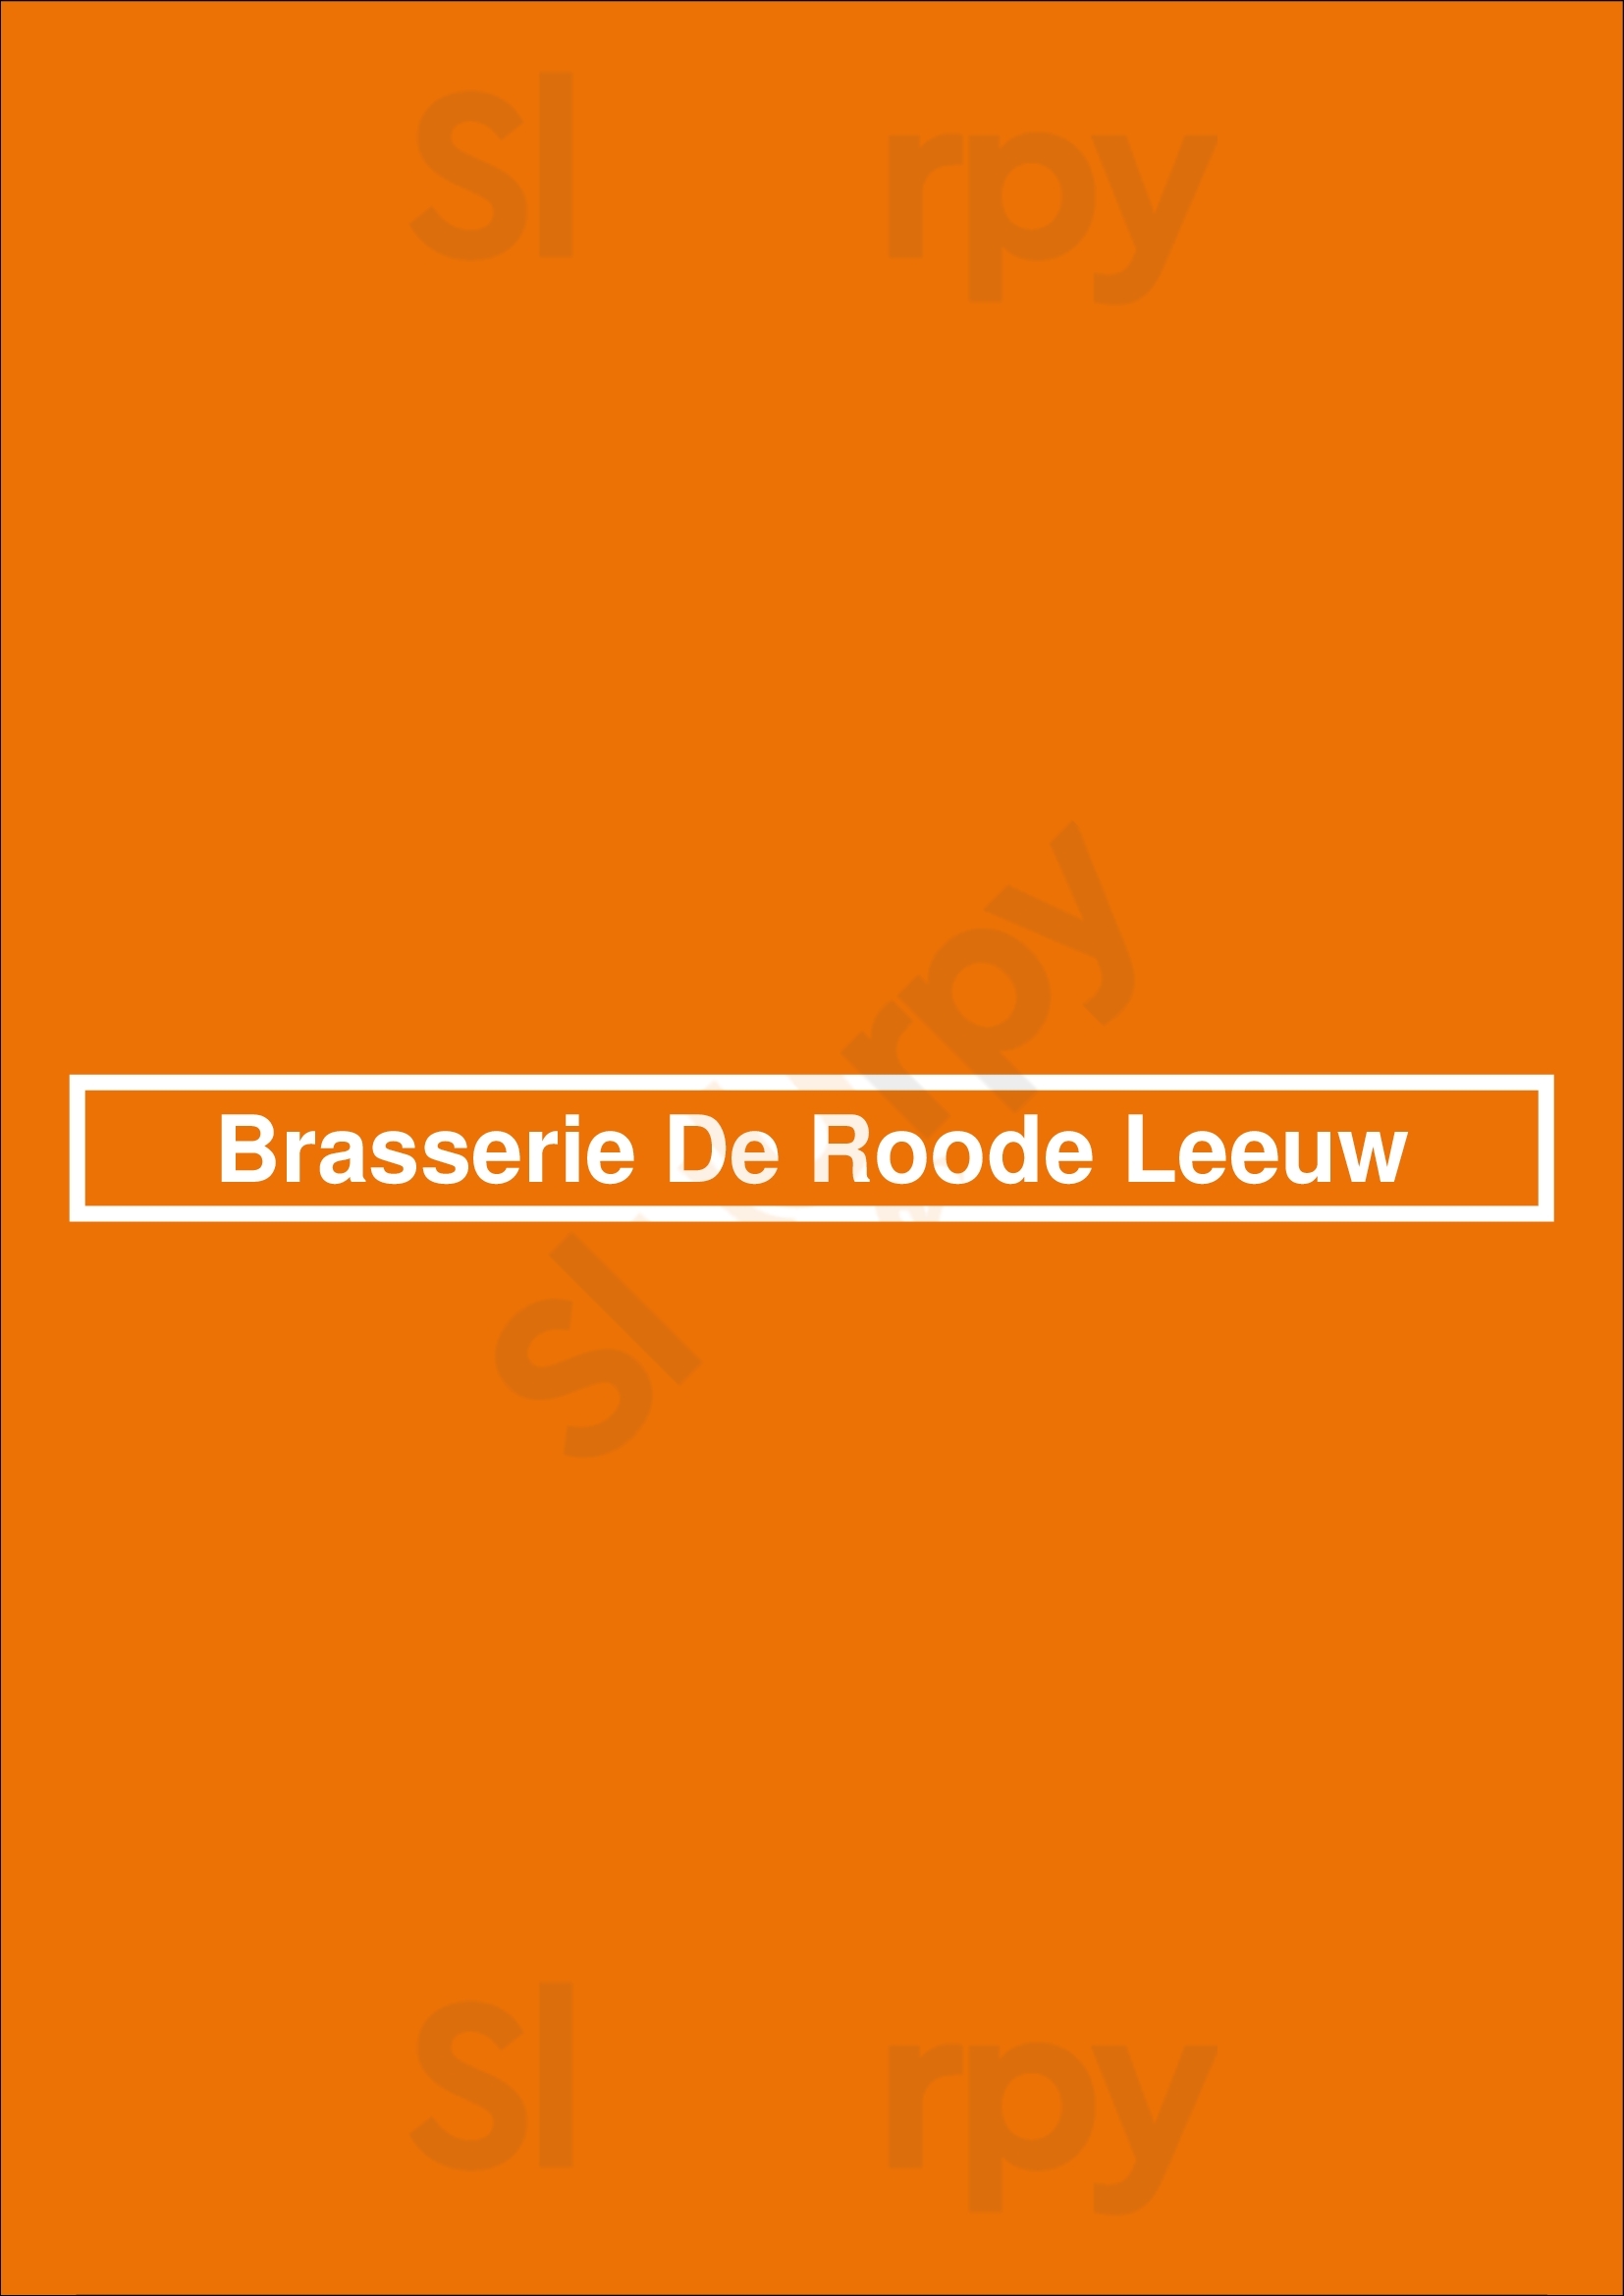 Brasserie De Roode Leeuw Amsterdam Menu - 1